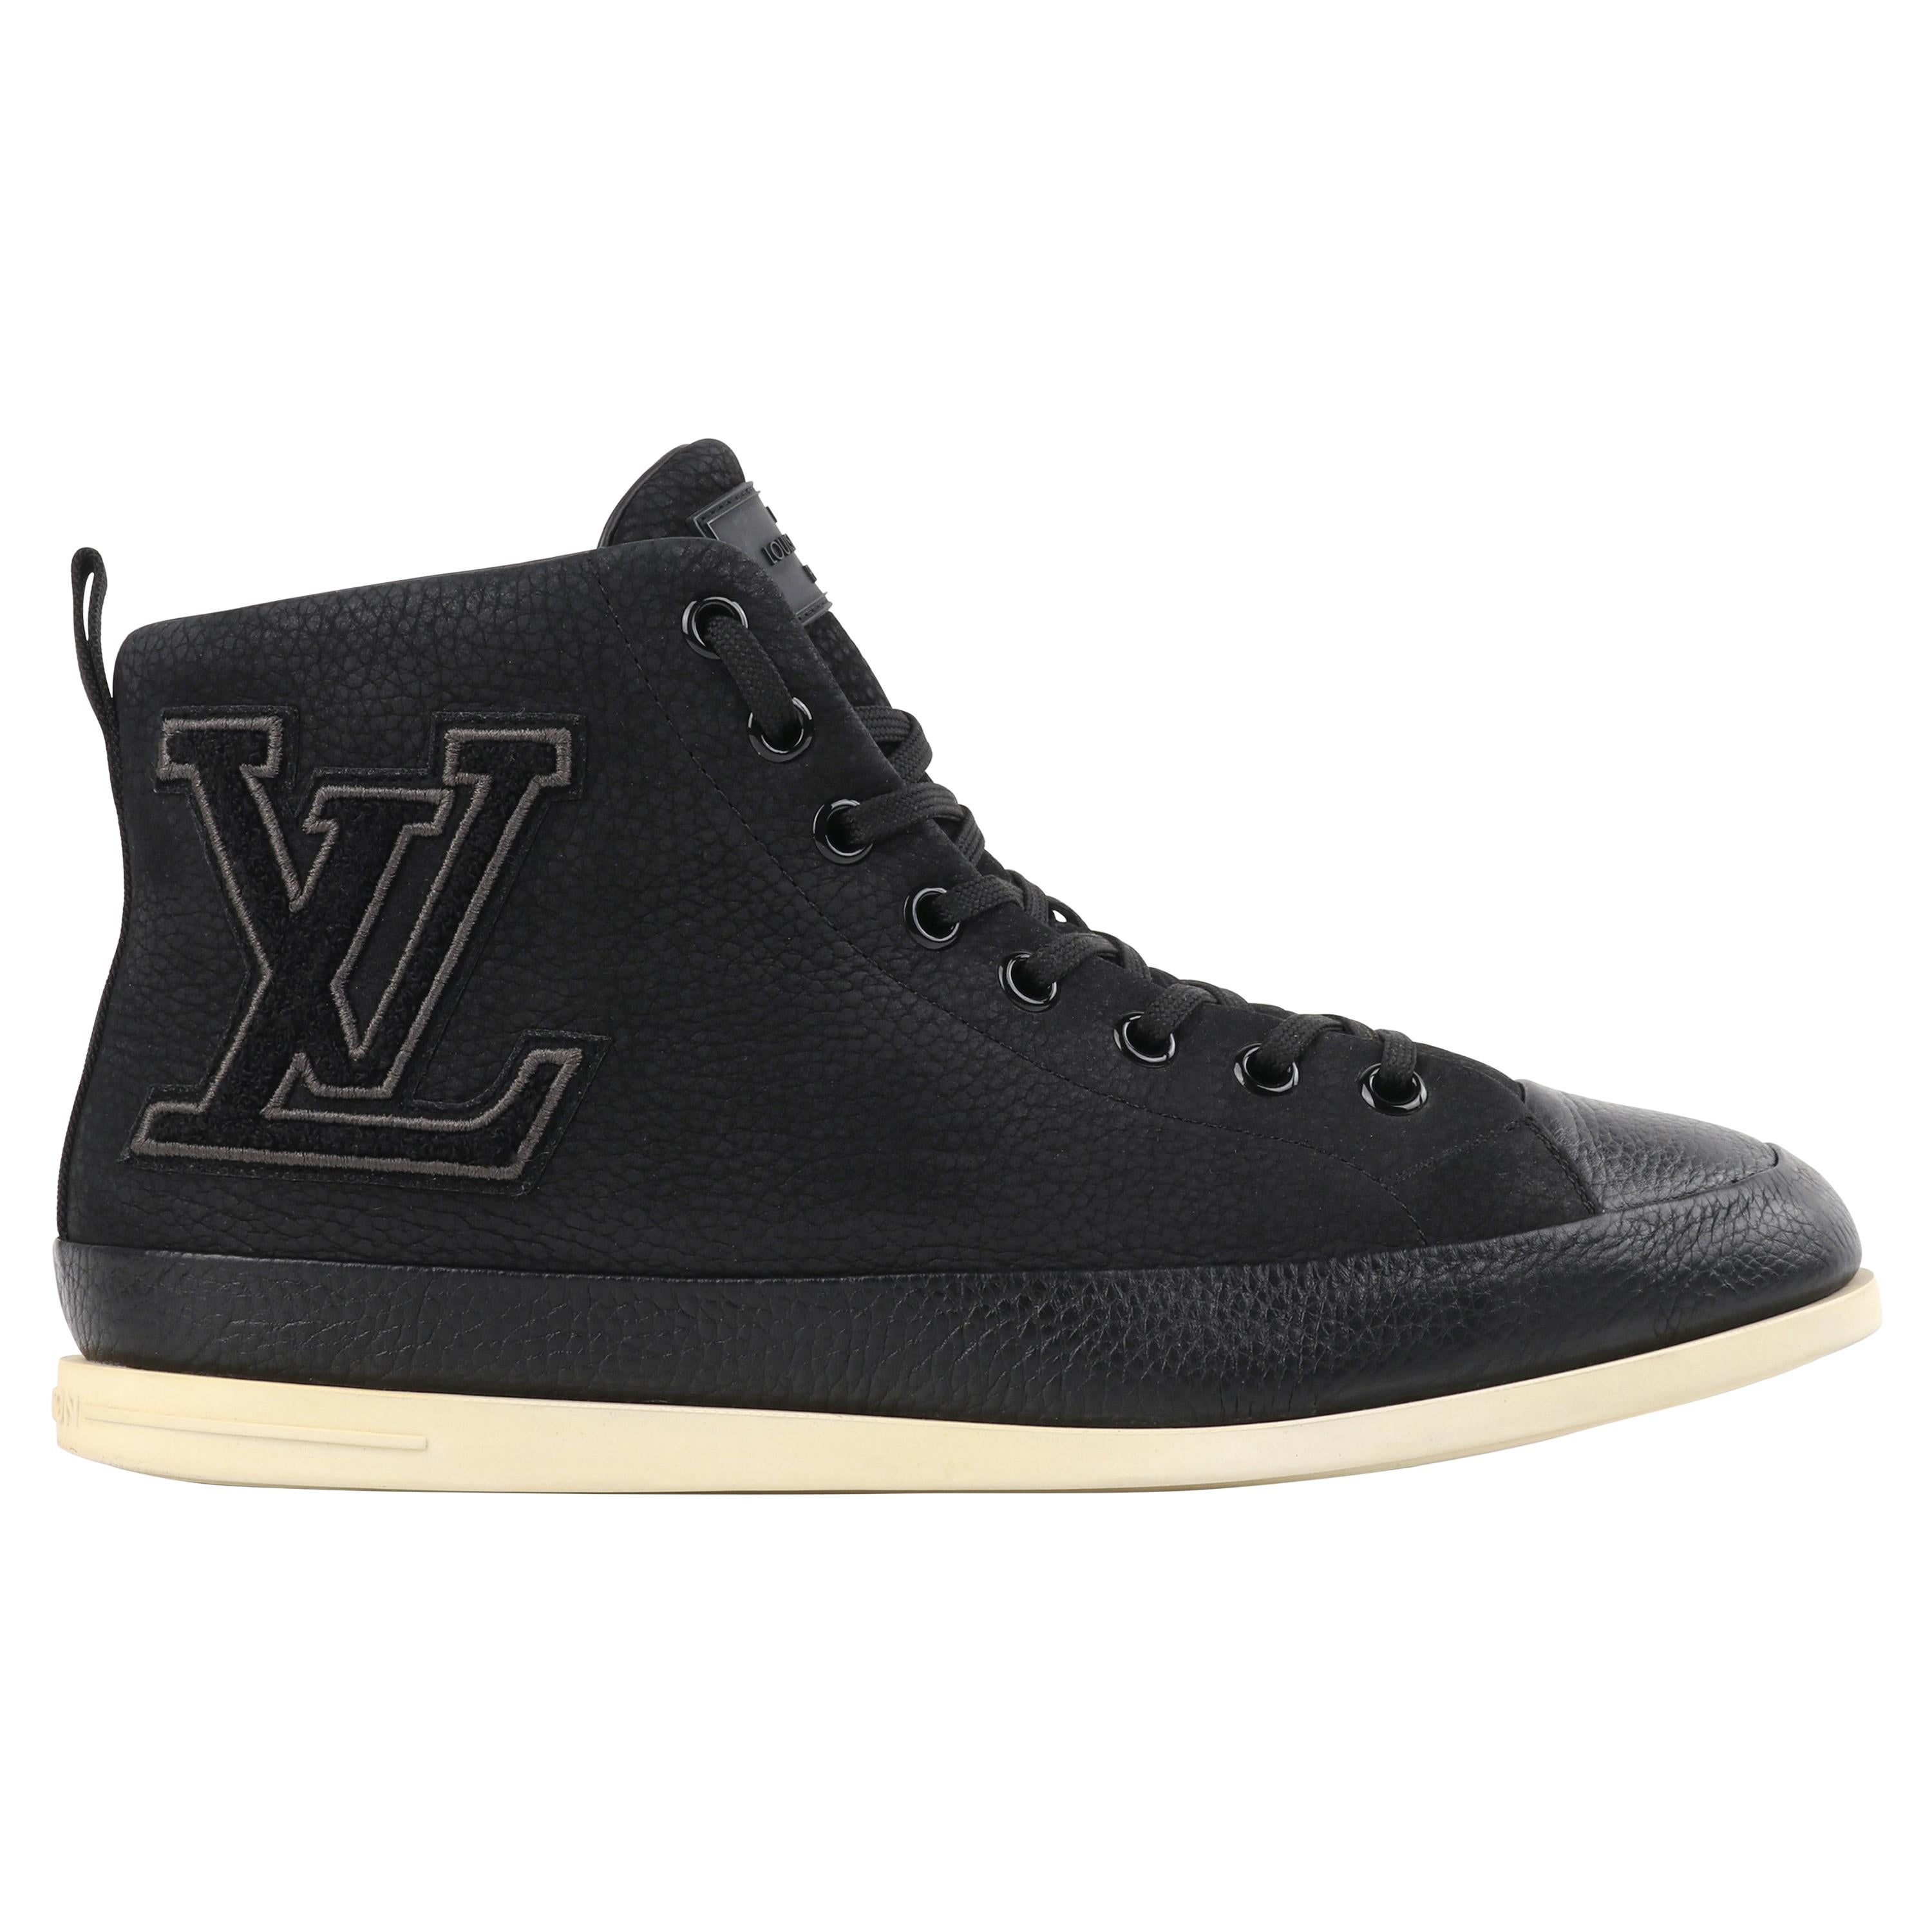 LOUIS VUITTON S/S 2012 "Surfside" Black Nubuck Leather High Top Sneaker Boots